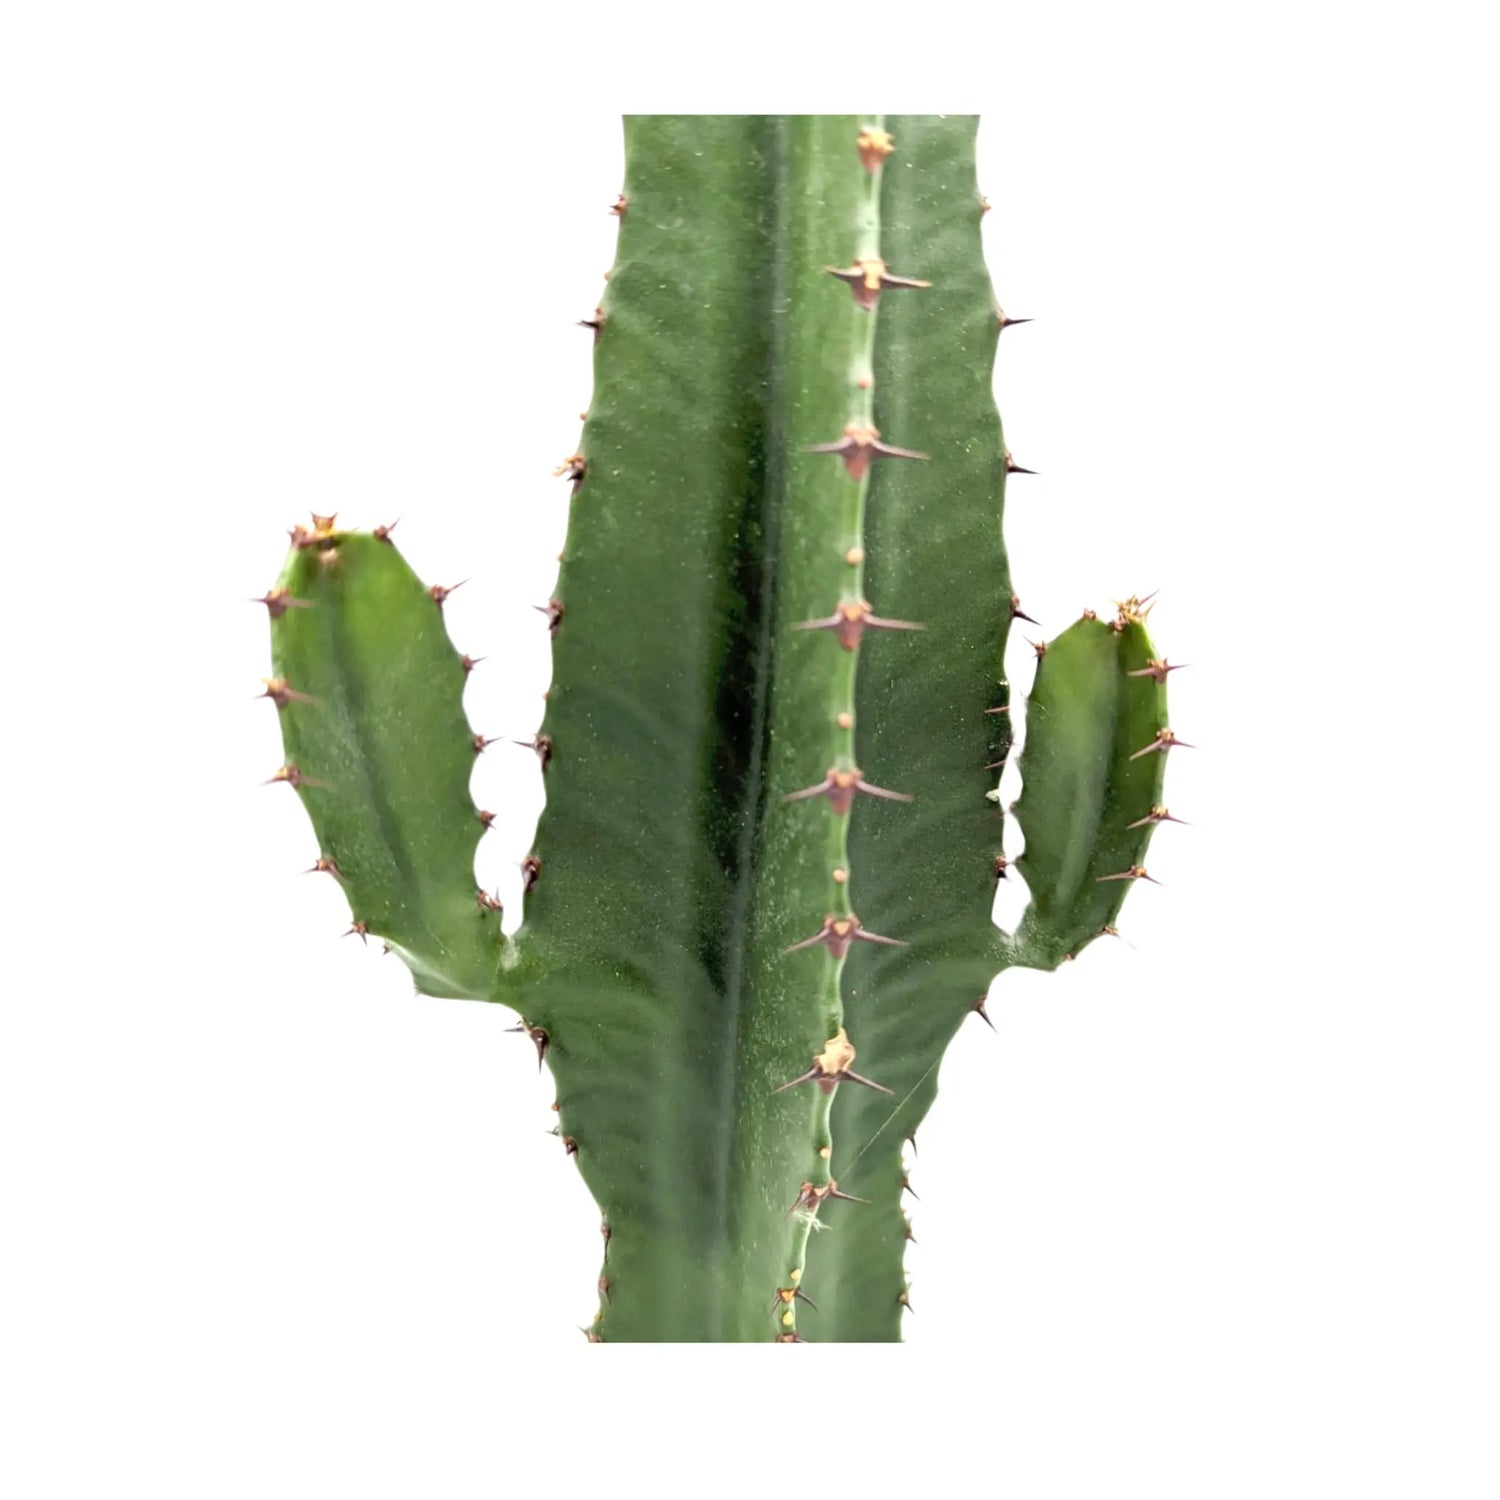 Euphorbia Acrurensis - Desert Candle Leaf Culture